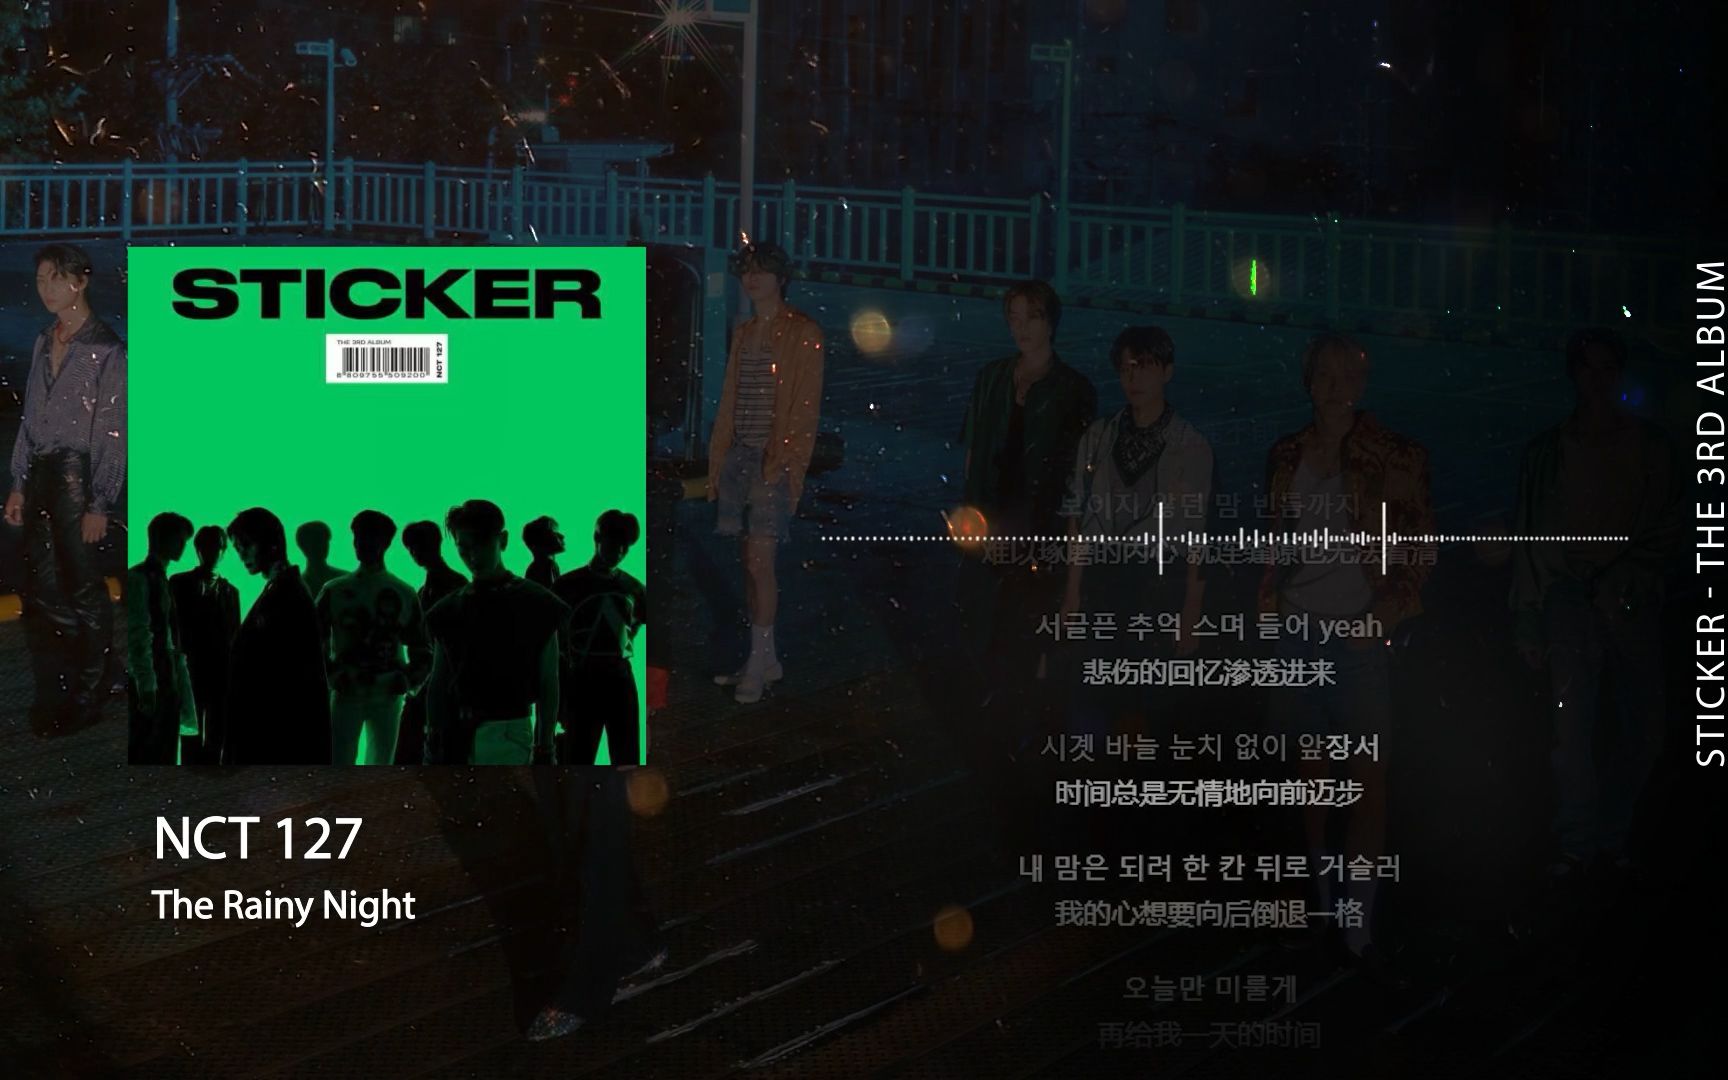 【8D环绕 | NCT127】正规三辑Sticker抒情流行曲「The Rainy Night(留给明天)」中韩双语字幕